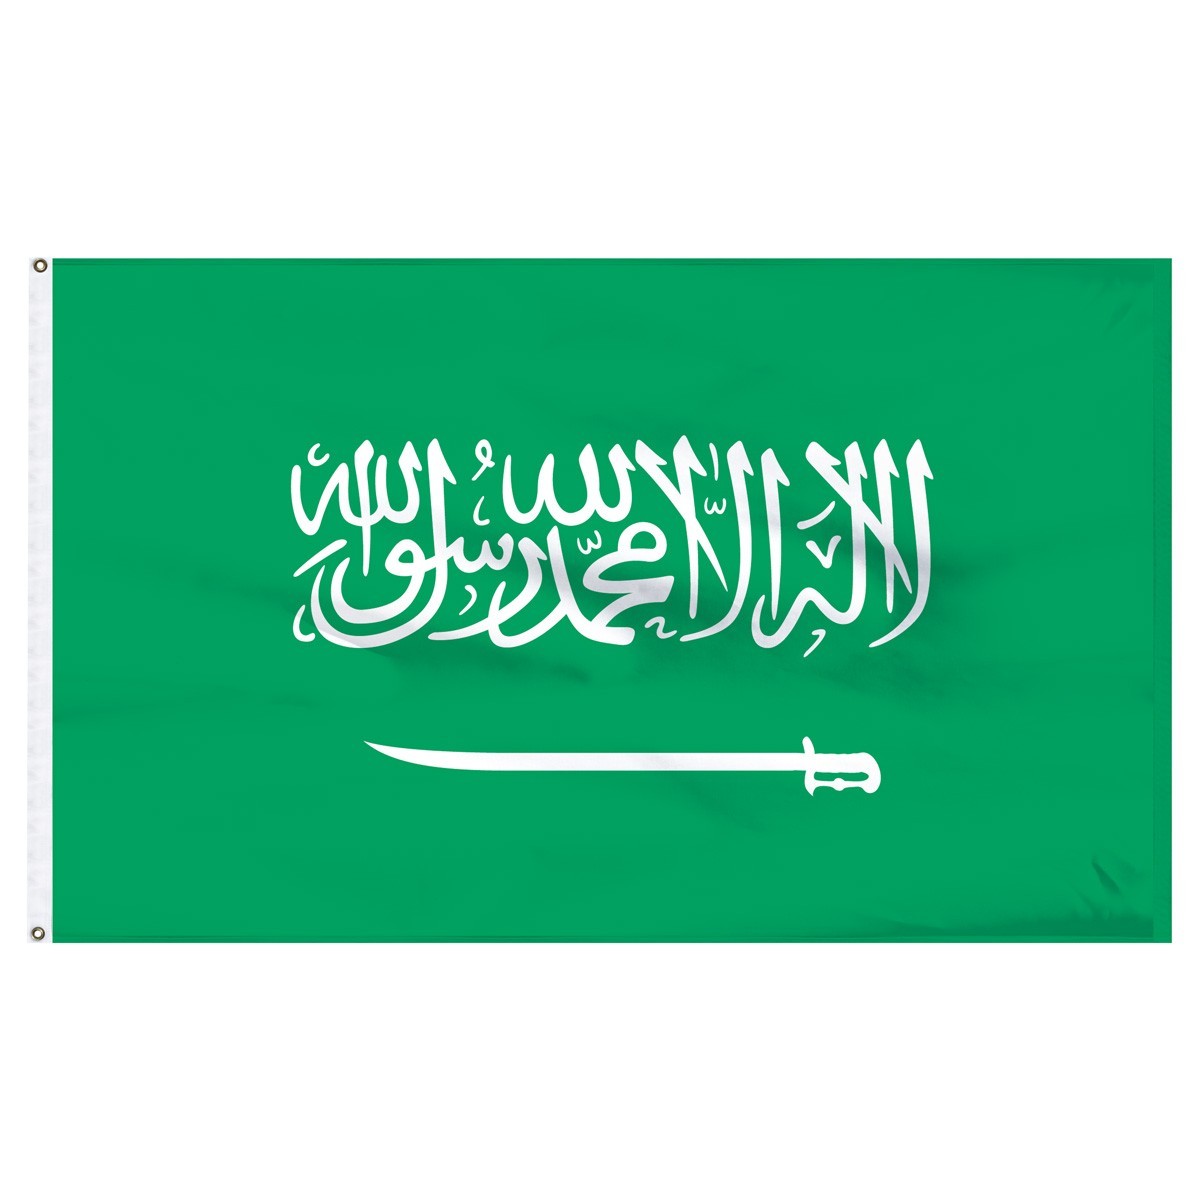 Saudi Arabia  4ft x 6ft  Outdoor Nylon Flag